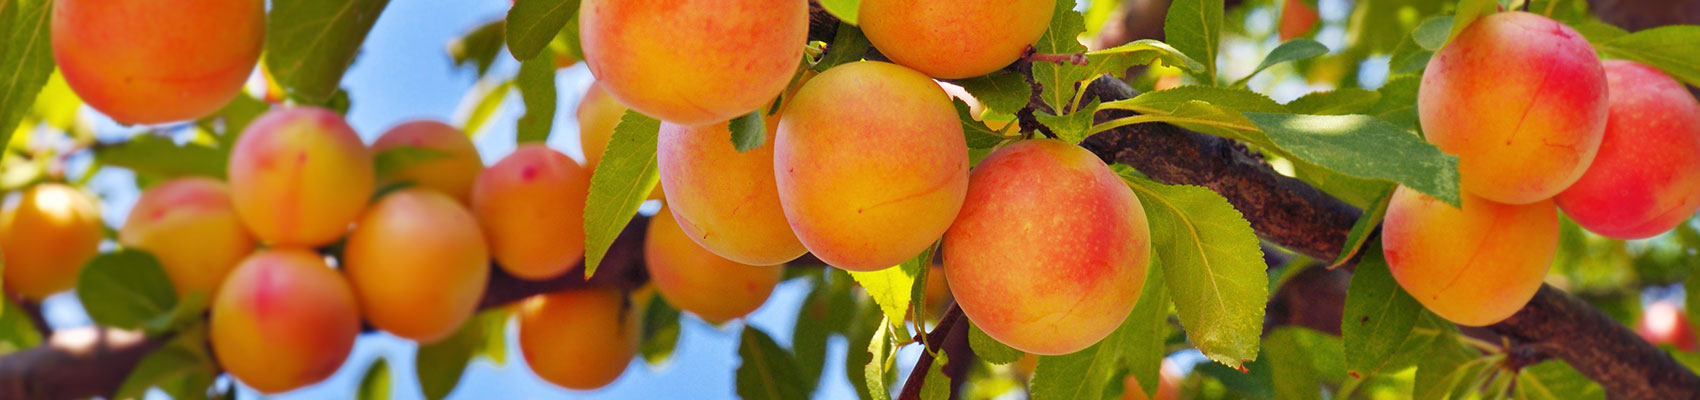 Fruit Basket Orchard Logo Rebranding